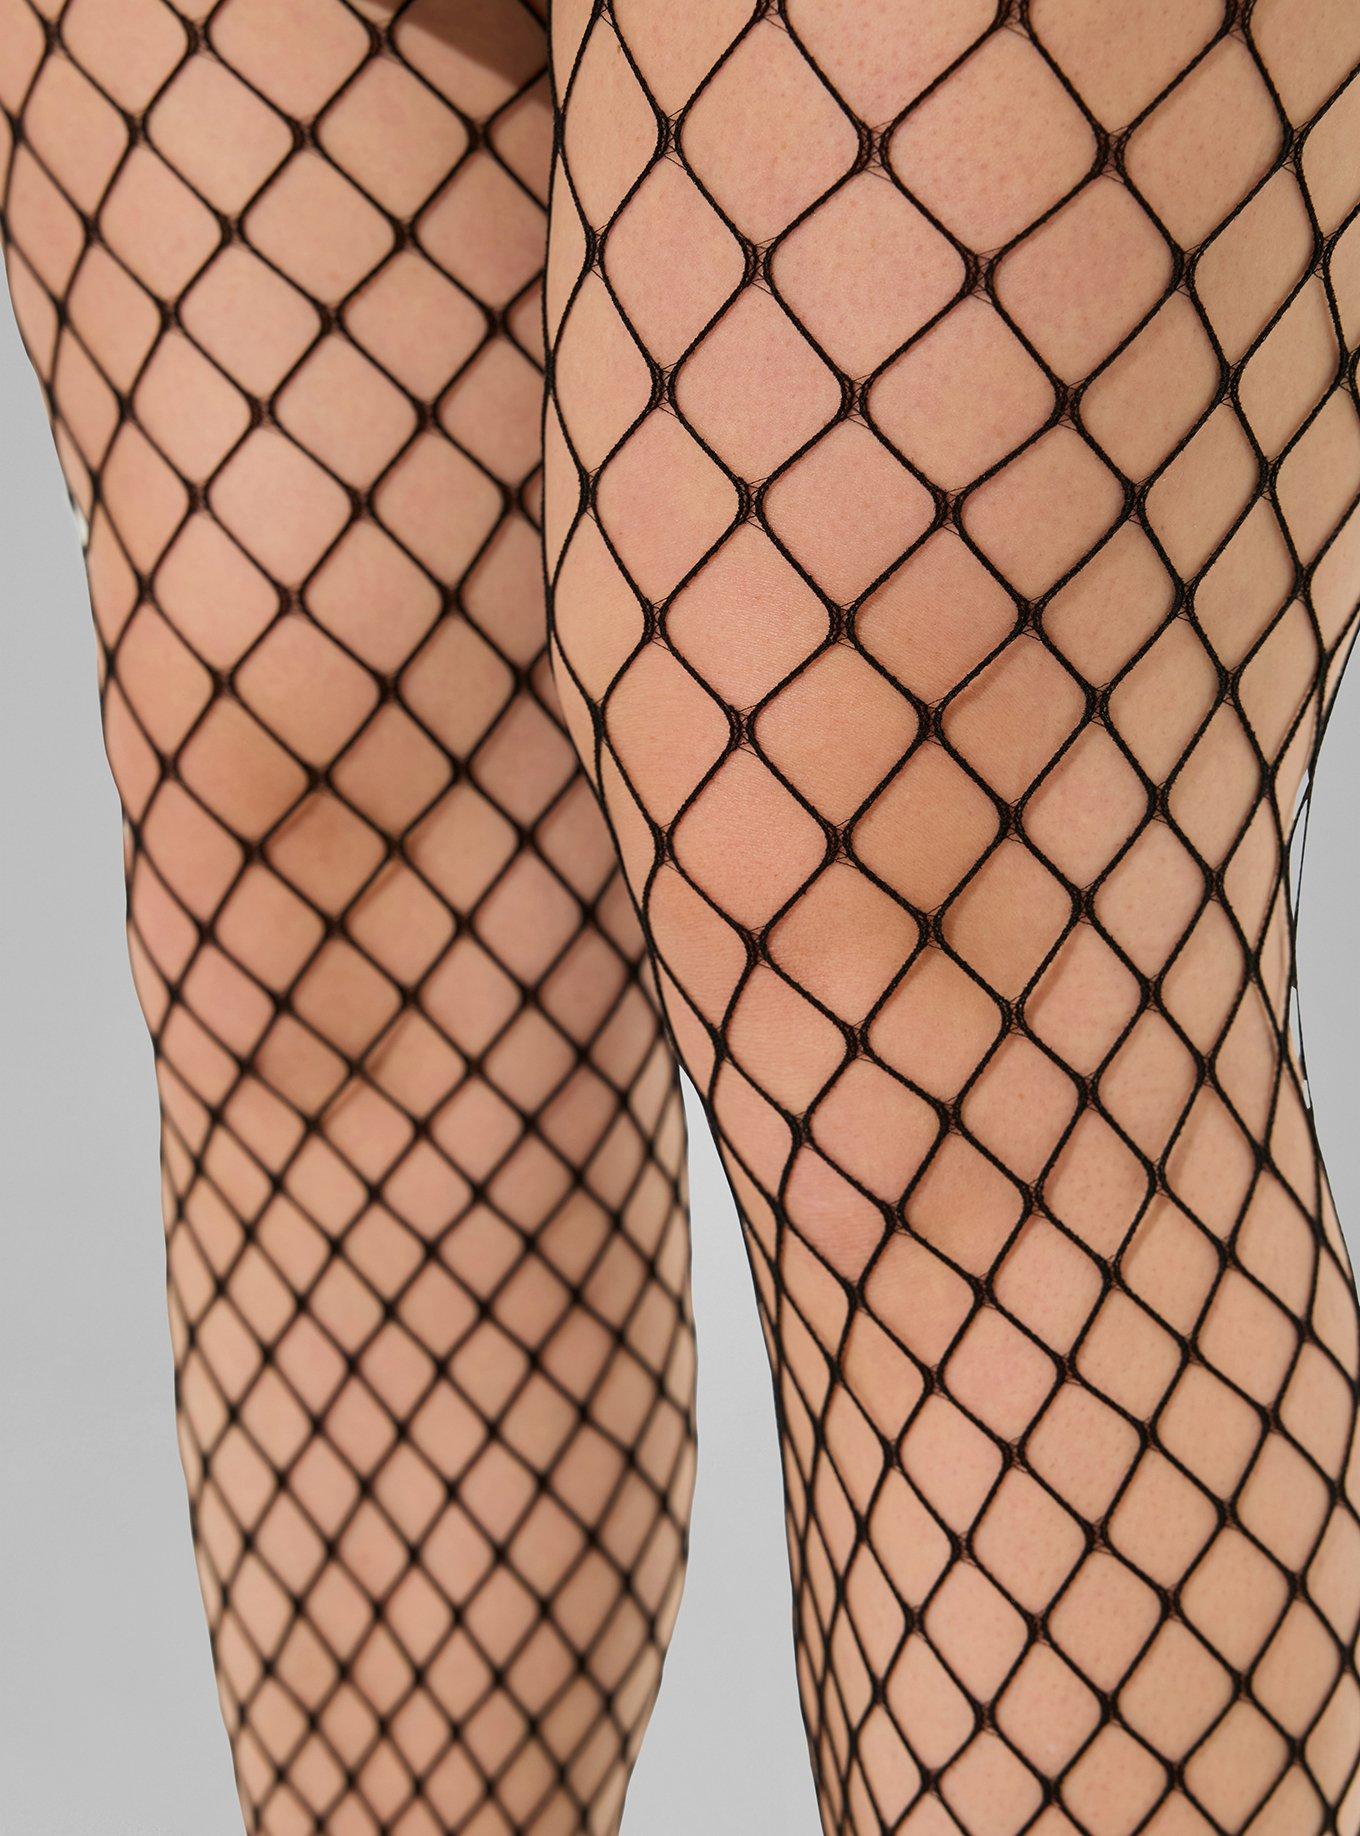 Women Elastic Hosiery Shredded Stockings Pantyhose Fishnet Tights Tearable  Socks 